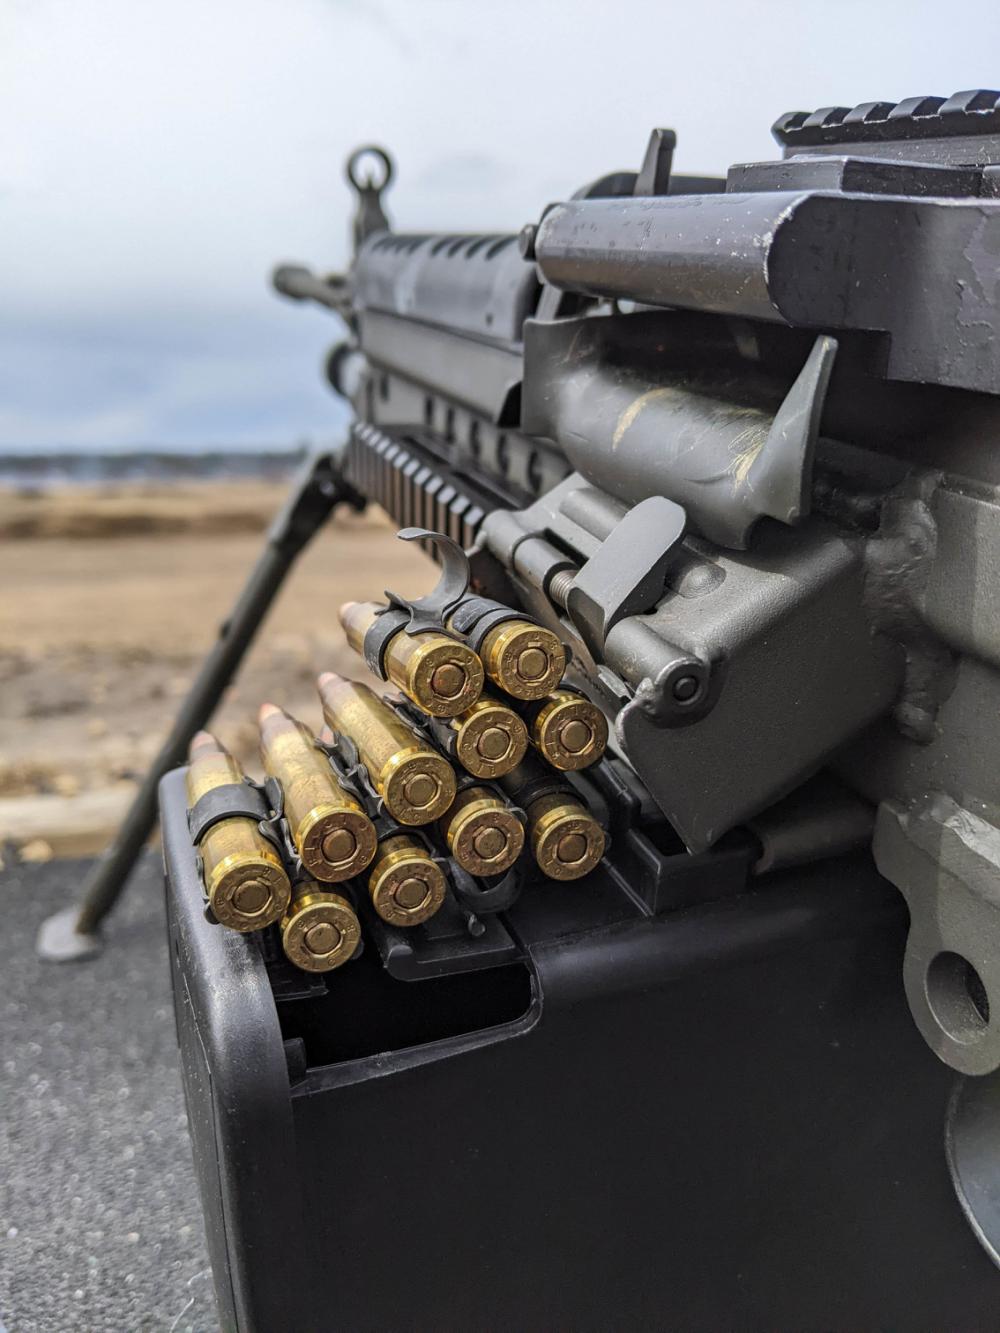 M249 Light Machine Gun At A Weapons Qualification Range